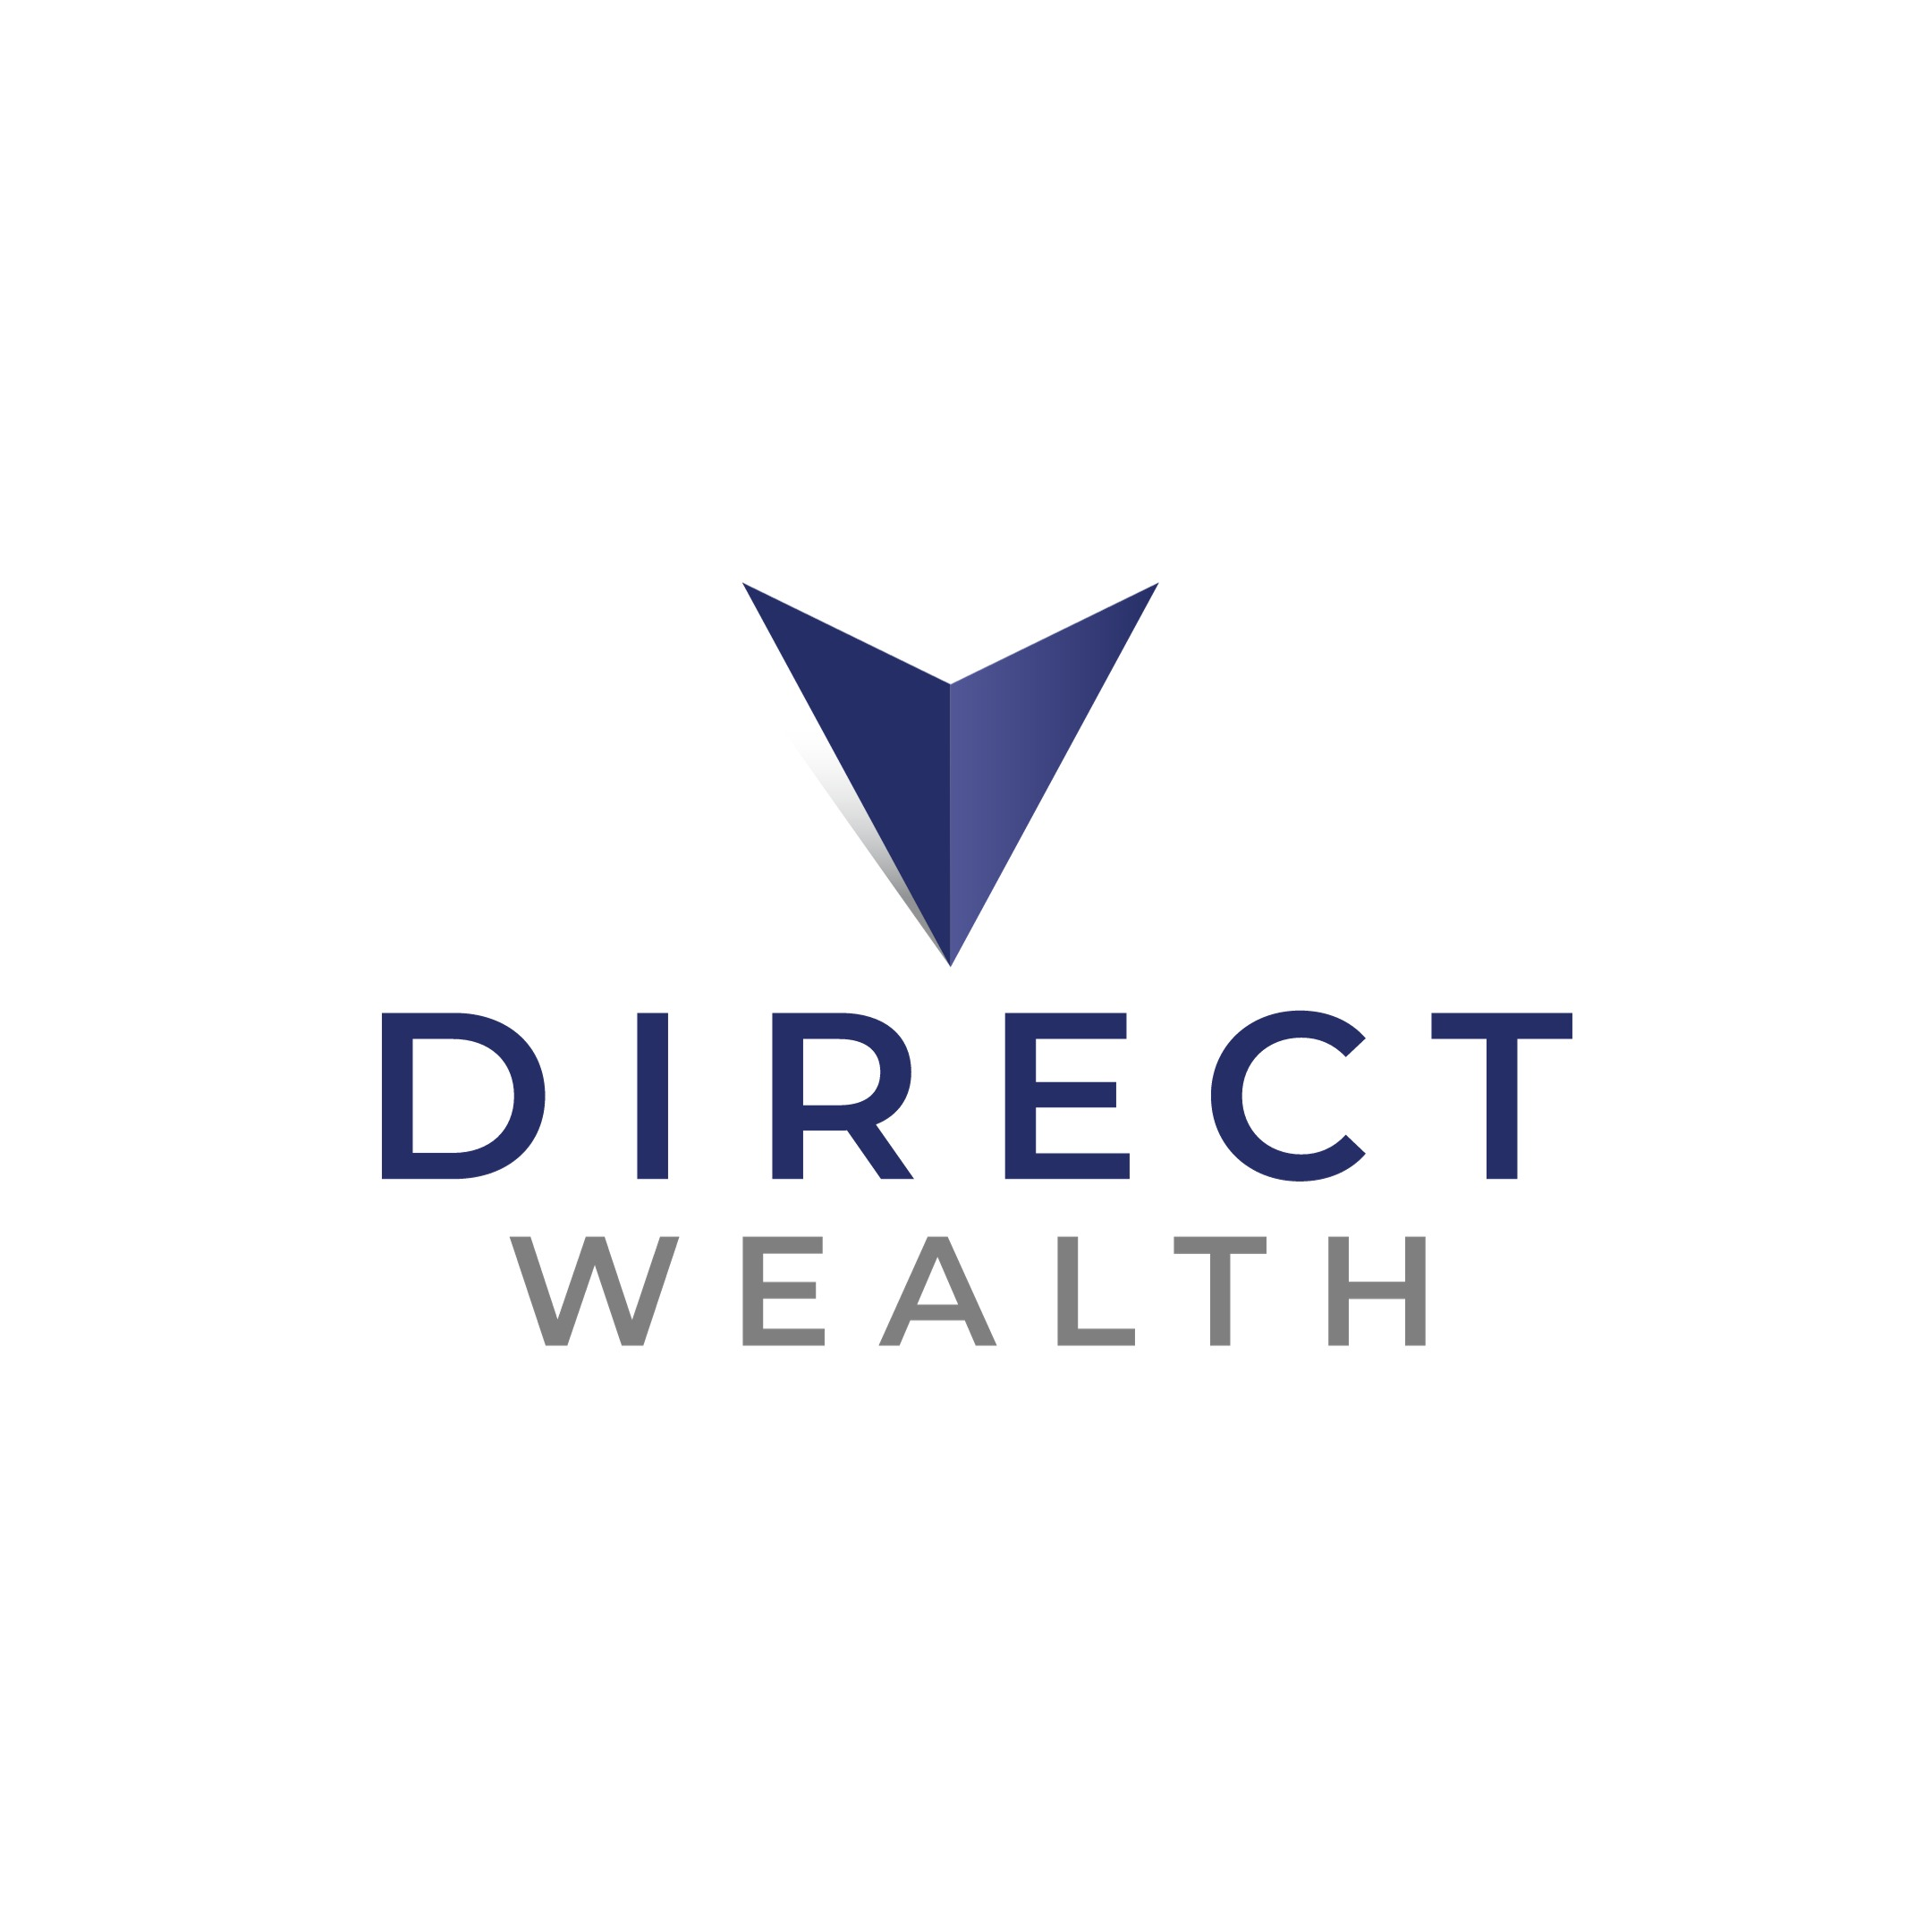 Direct Wealth - Maroochydore, QLD 4558 - (07) 3556 9400 | ShowMeLocal.com